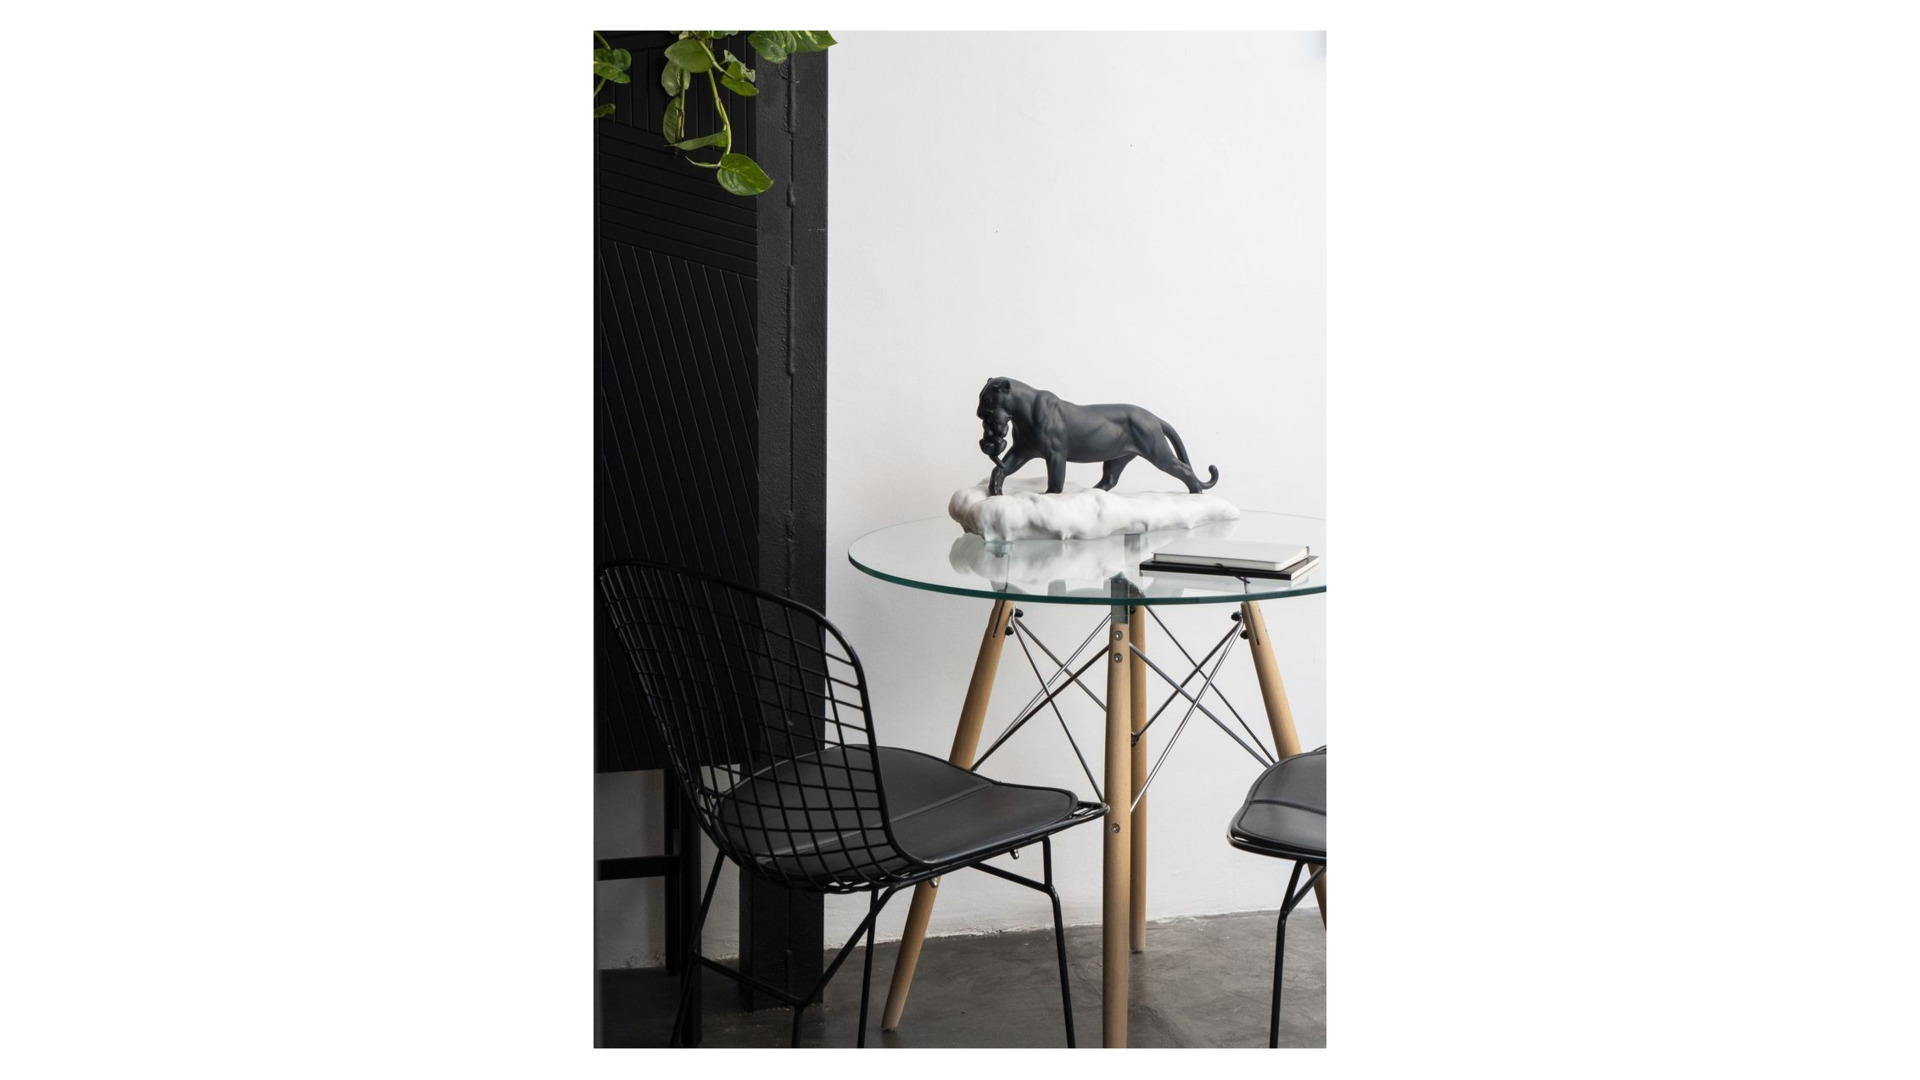 Фигурка Lladro Черная пантера 48х25 см, фарфор